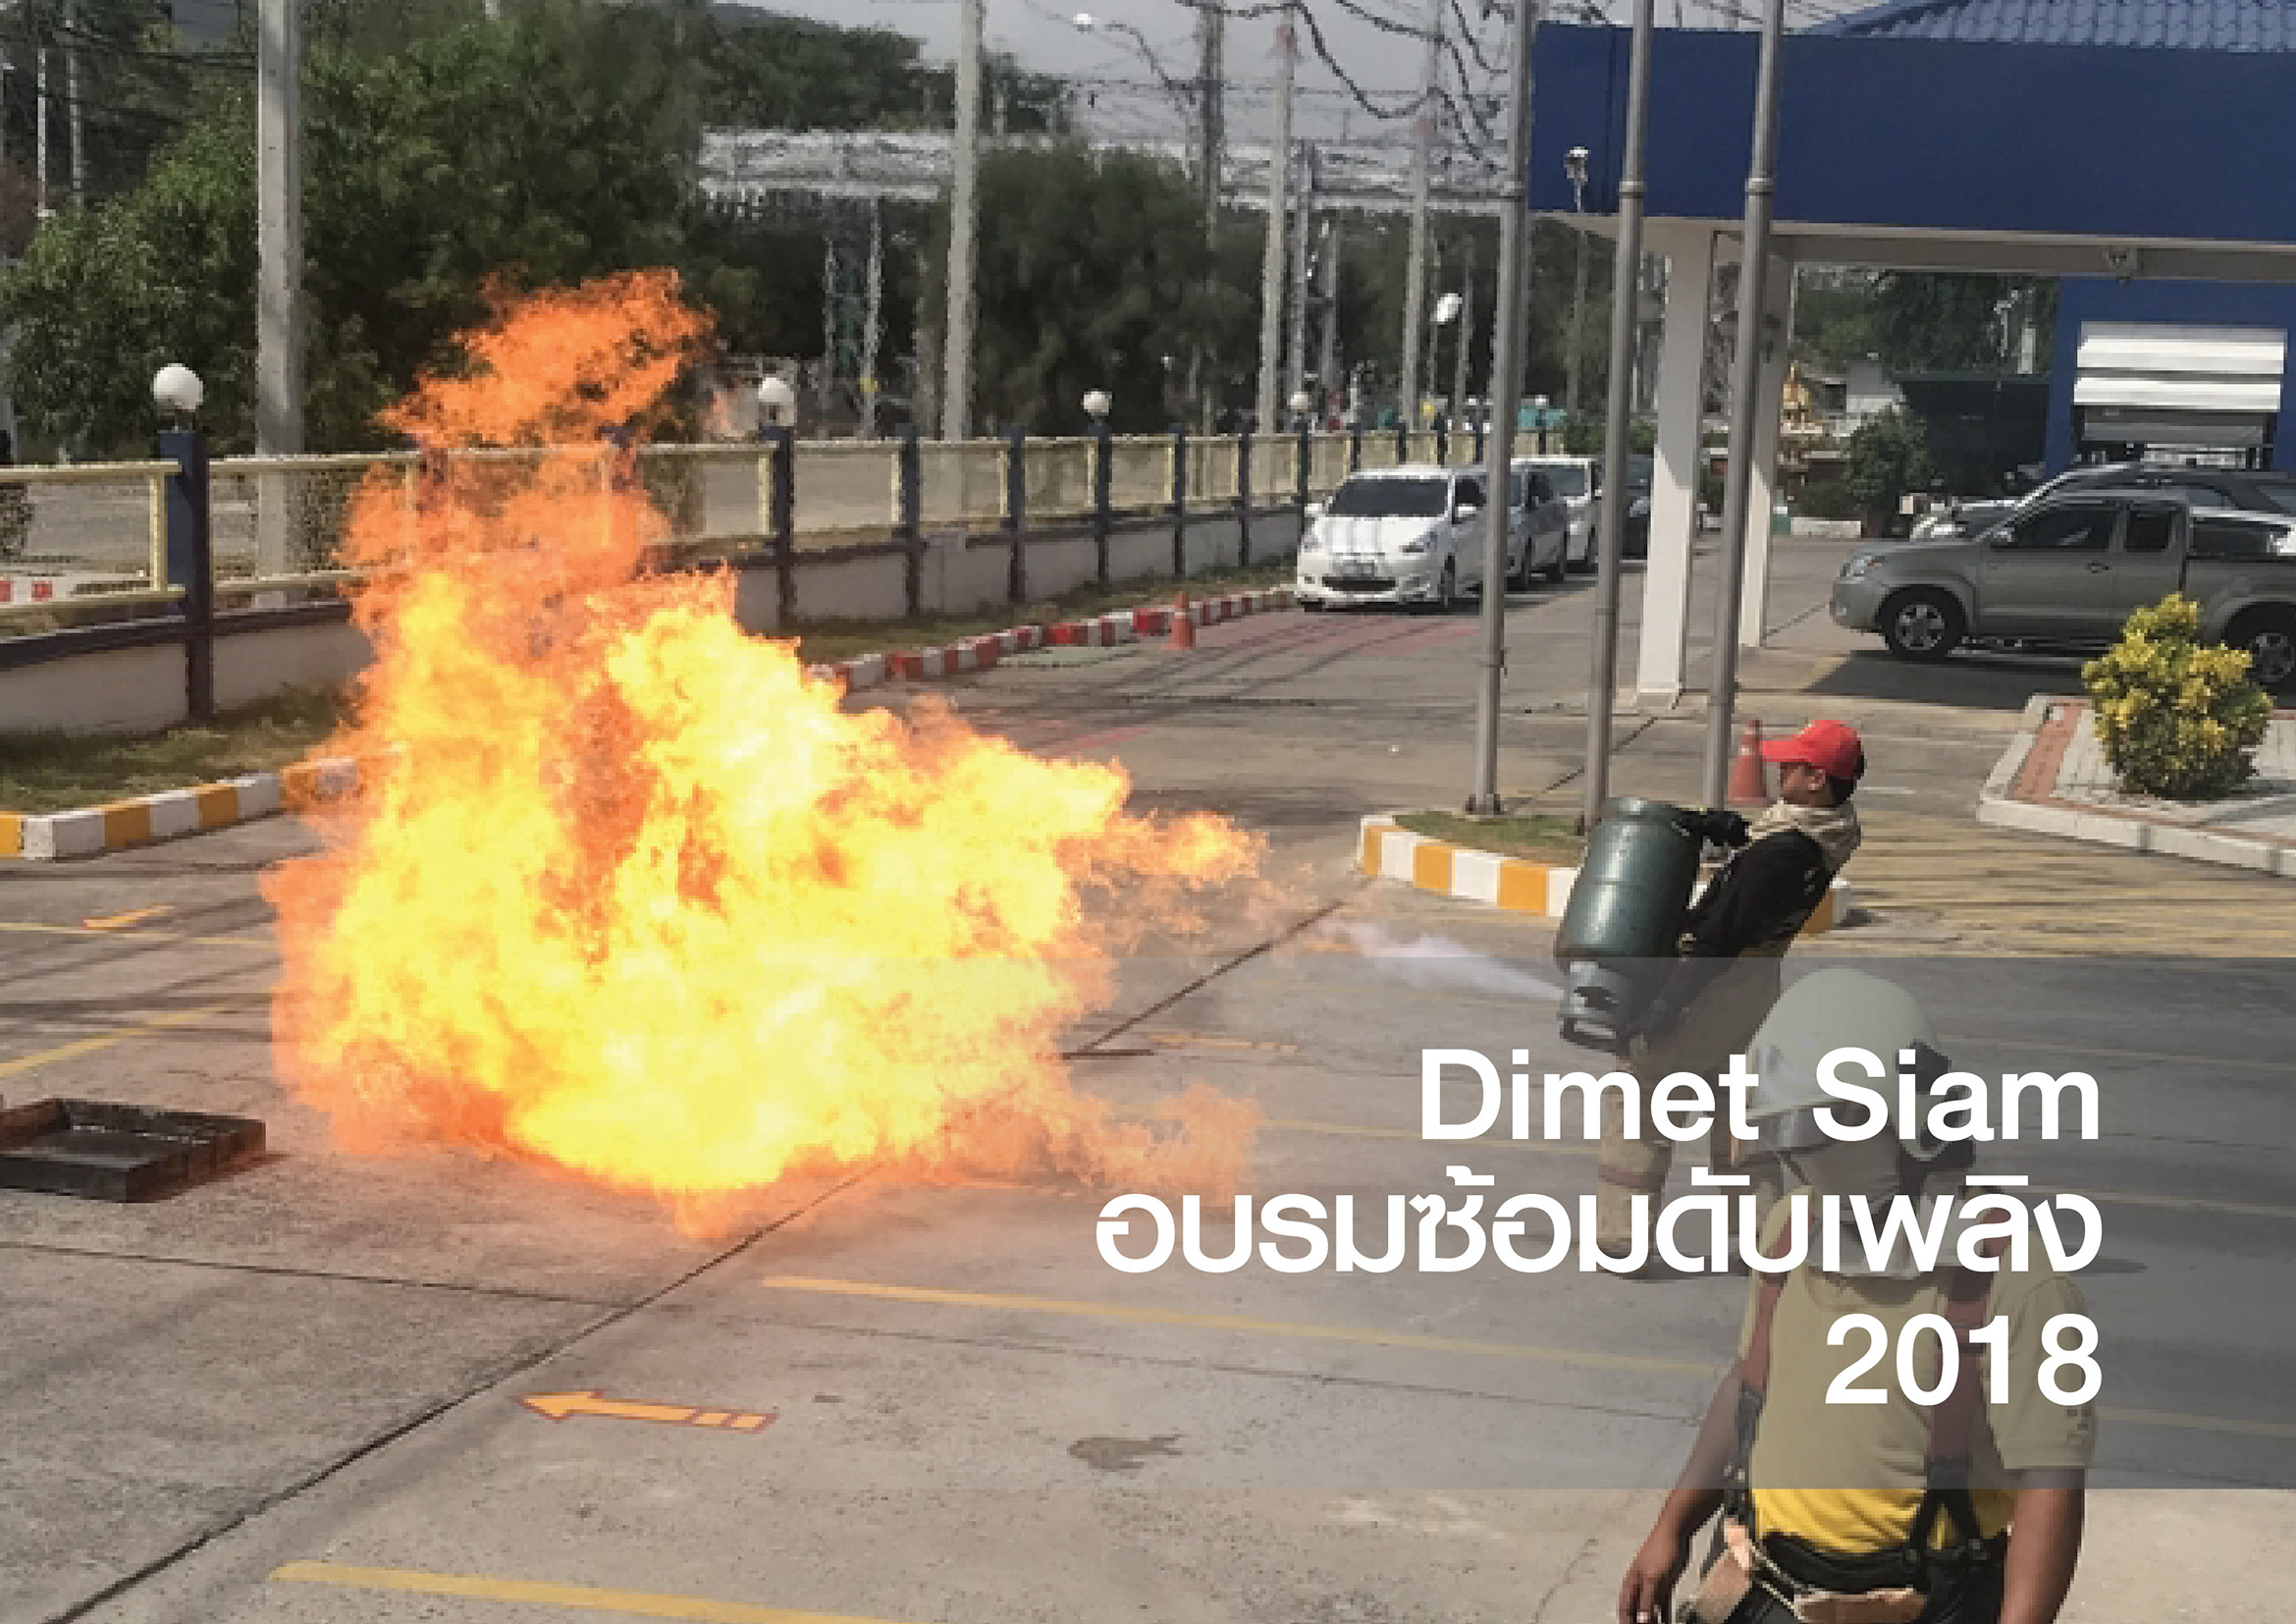 Dimet Siam อบรมซ้อมดับเพลิง 2018